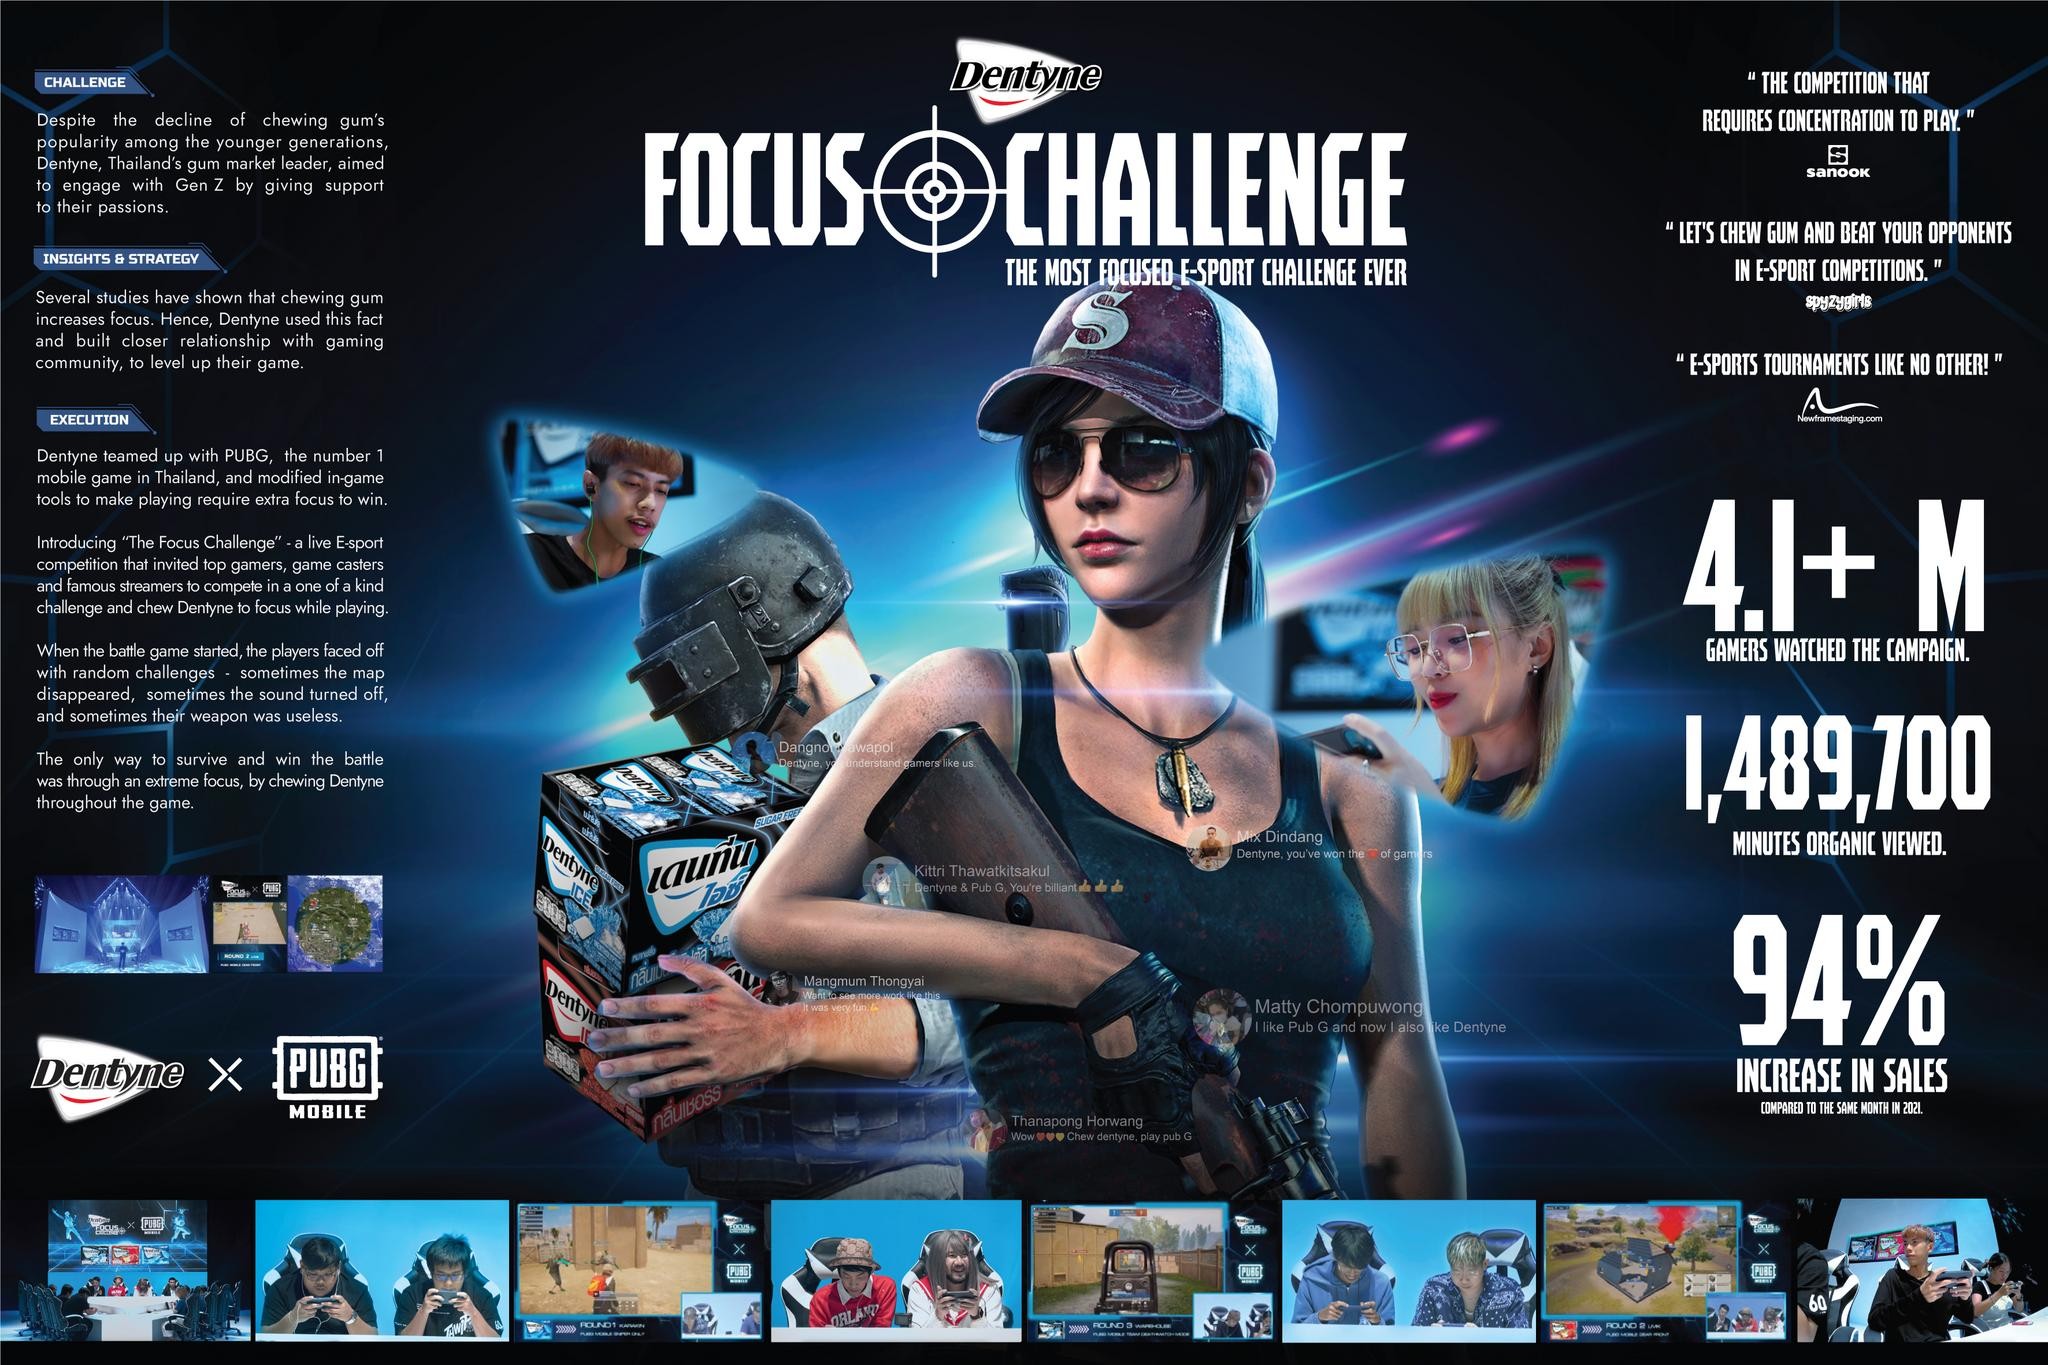 The Focus Challenge